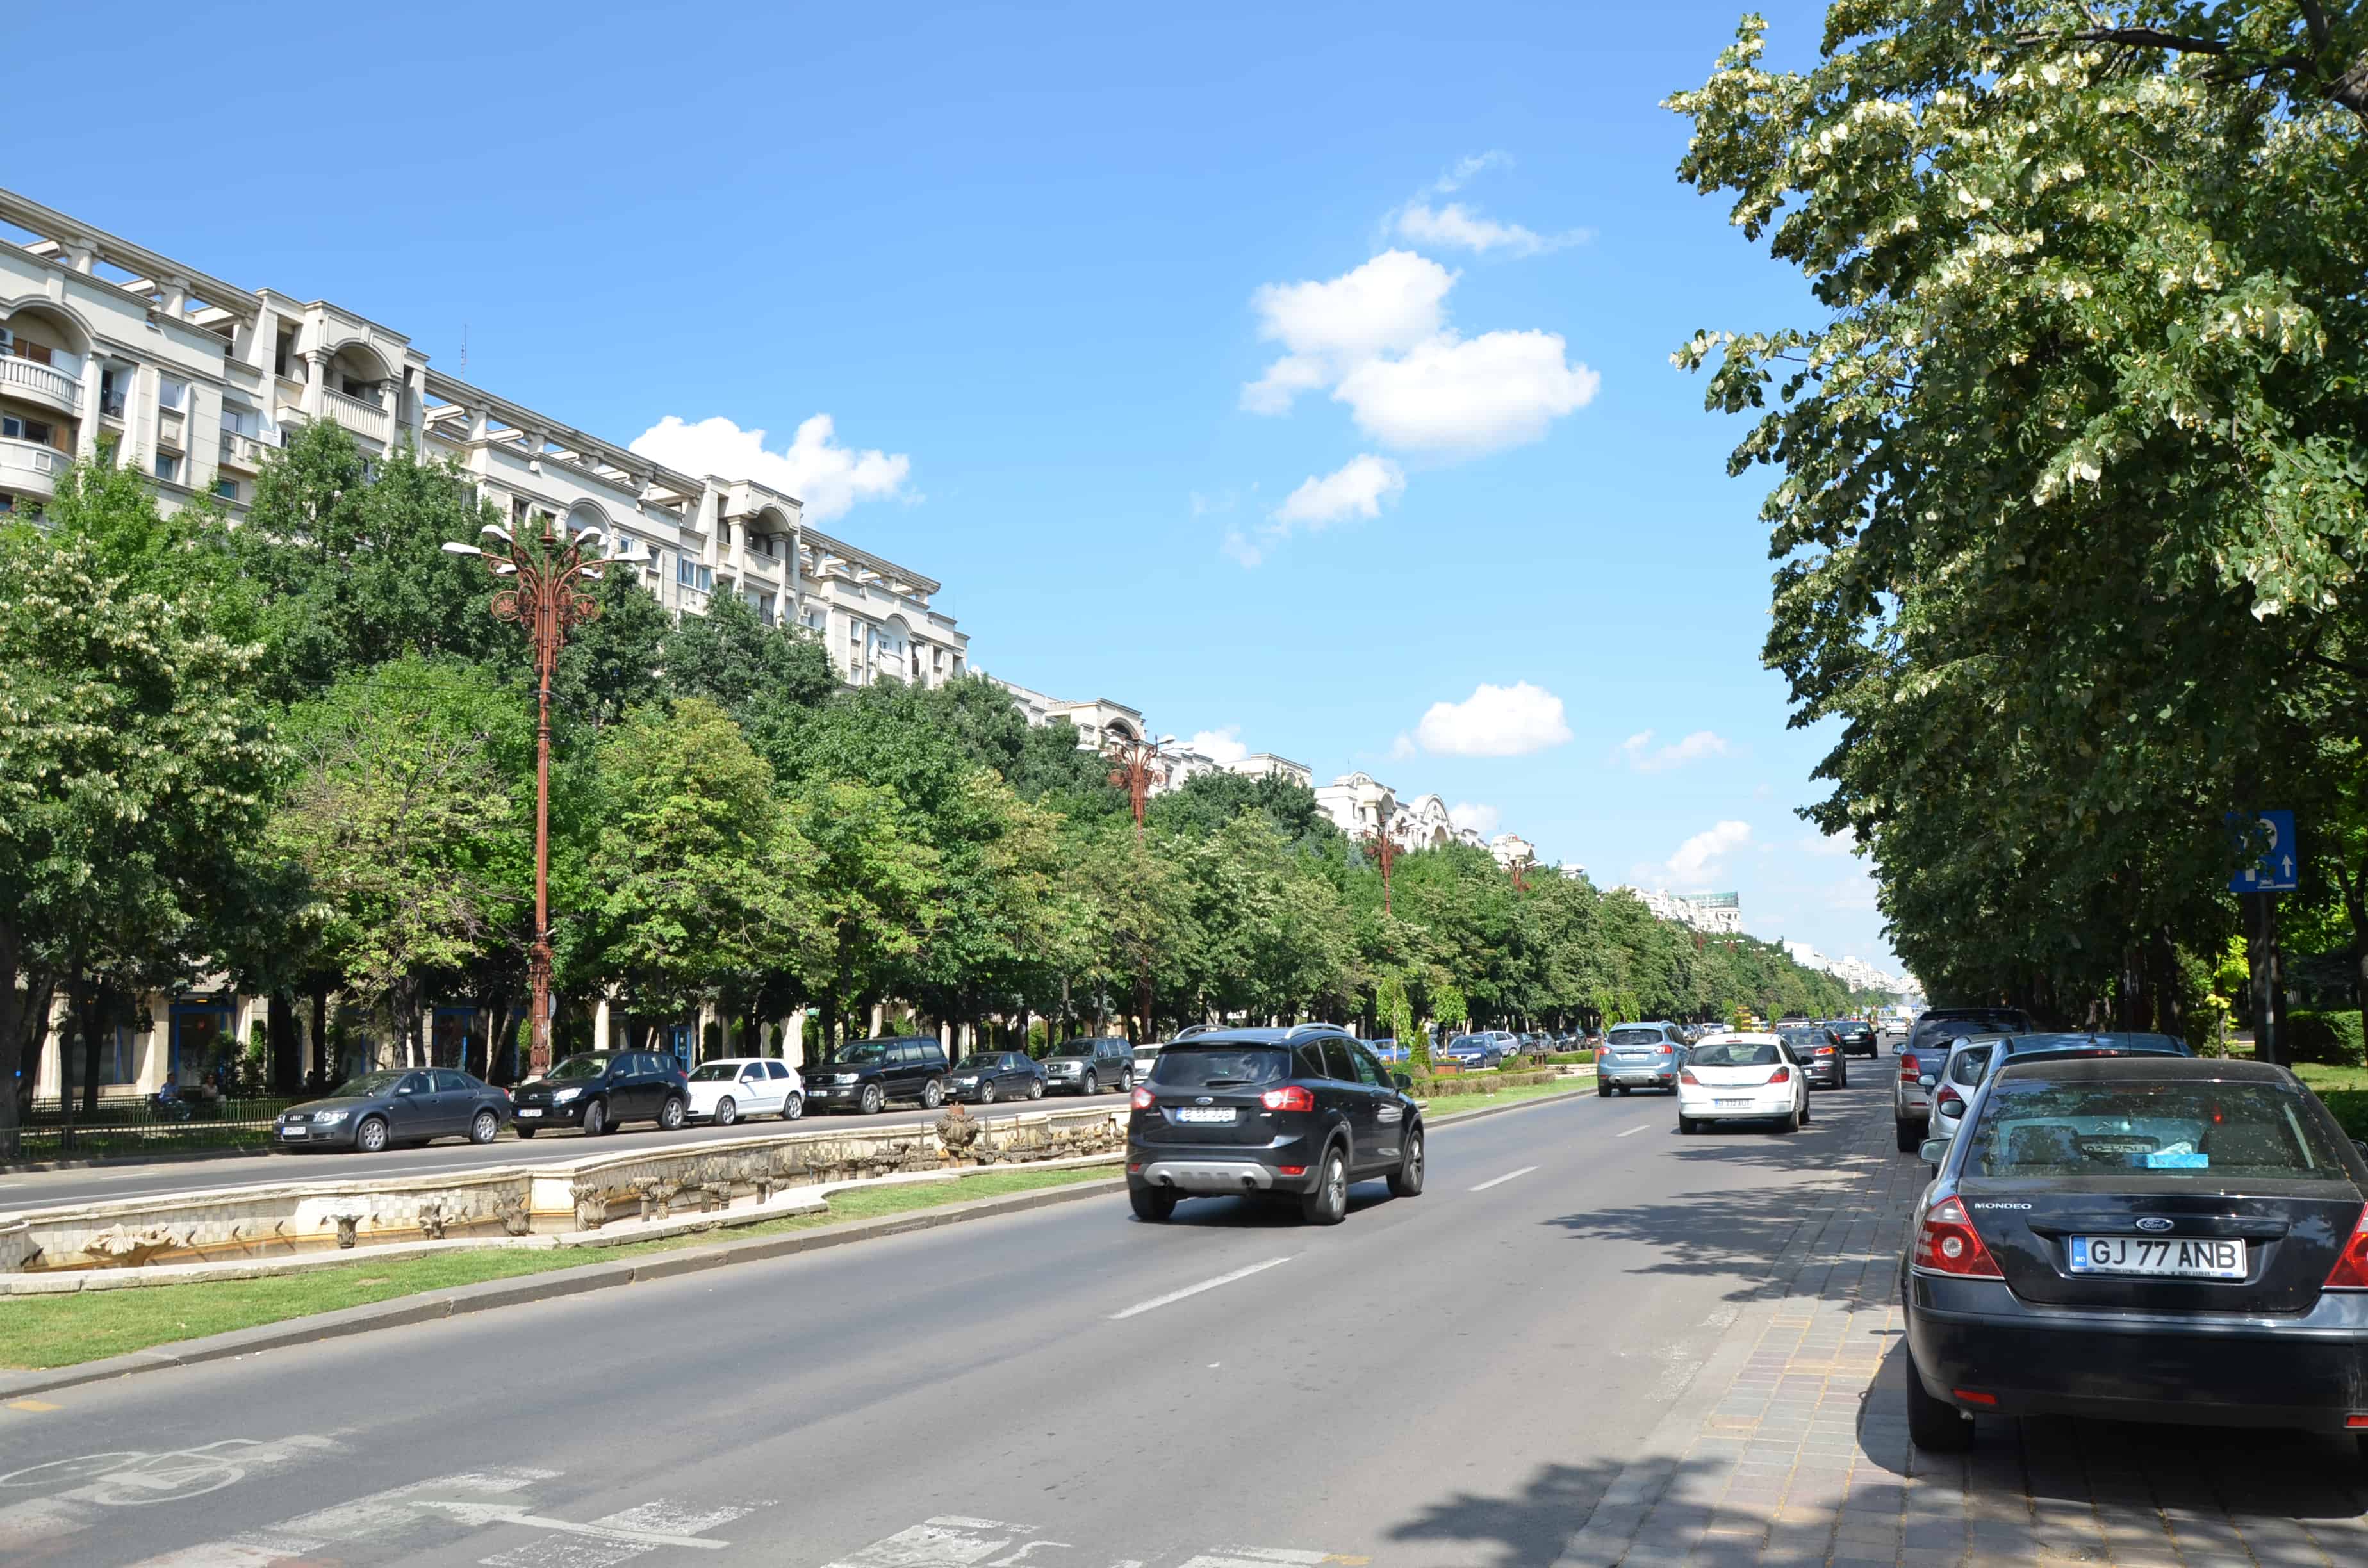 Bulevardul Unirii in Bucharest, Romania